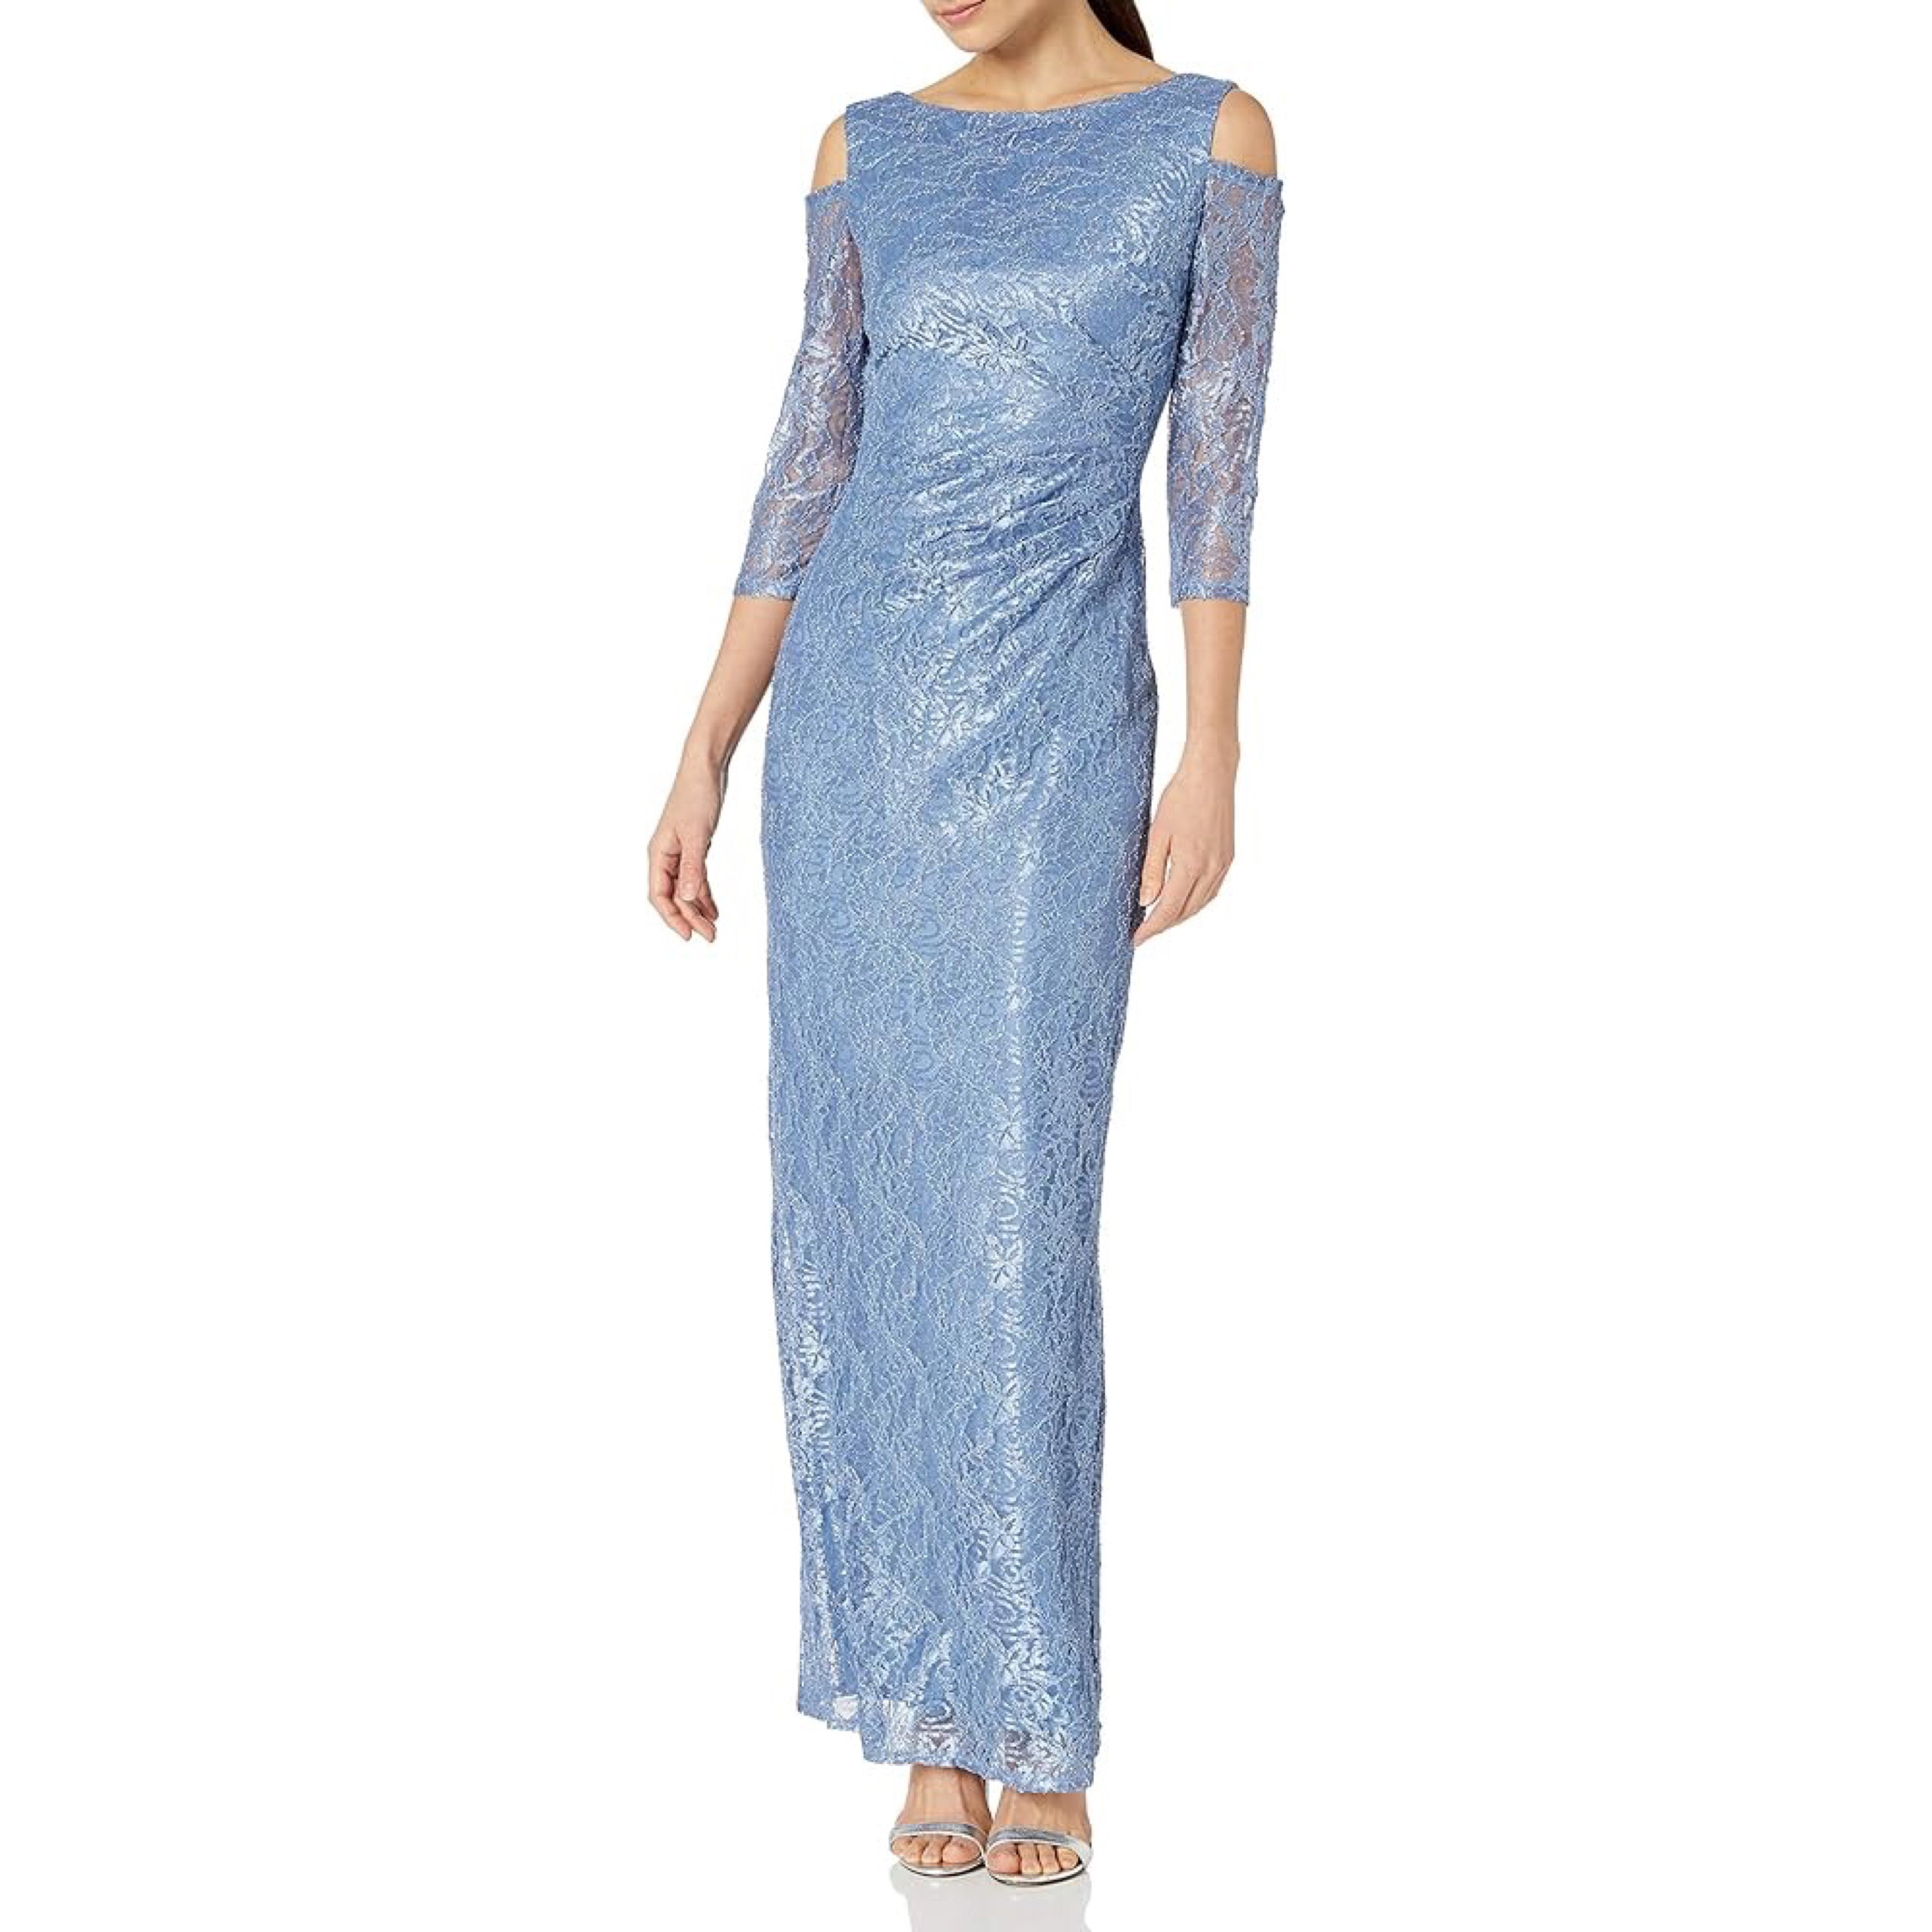 Marina light blue dress, size 10